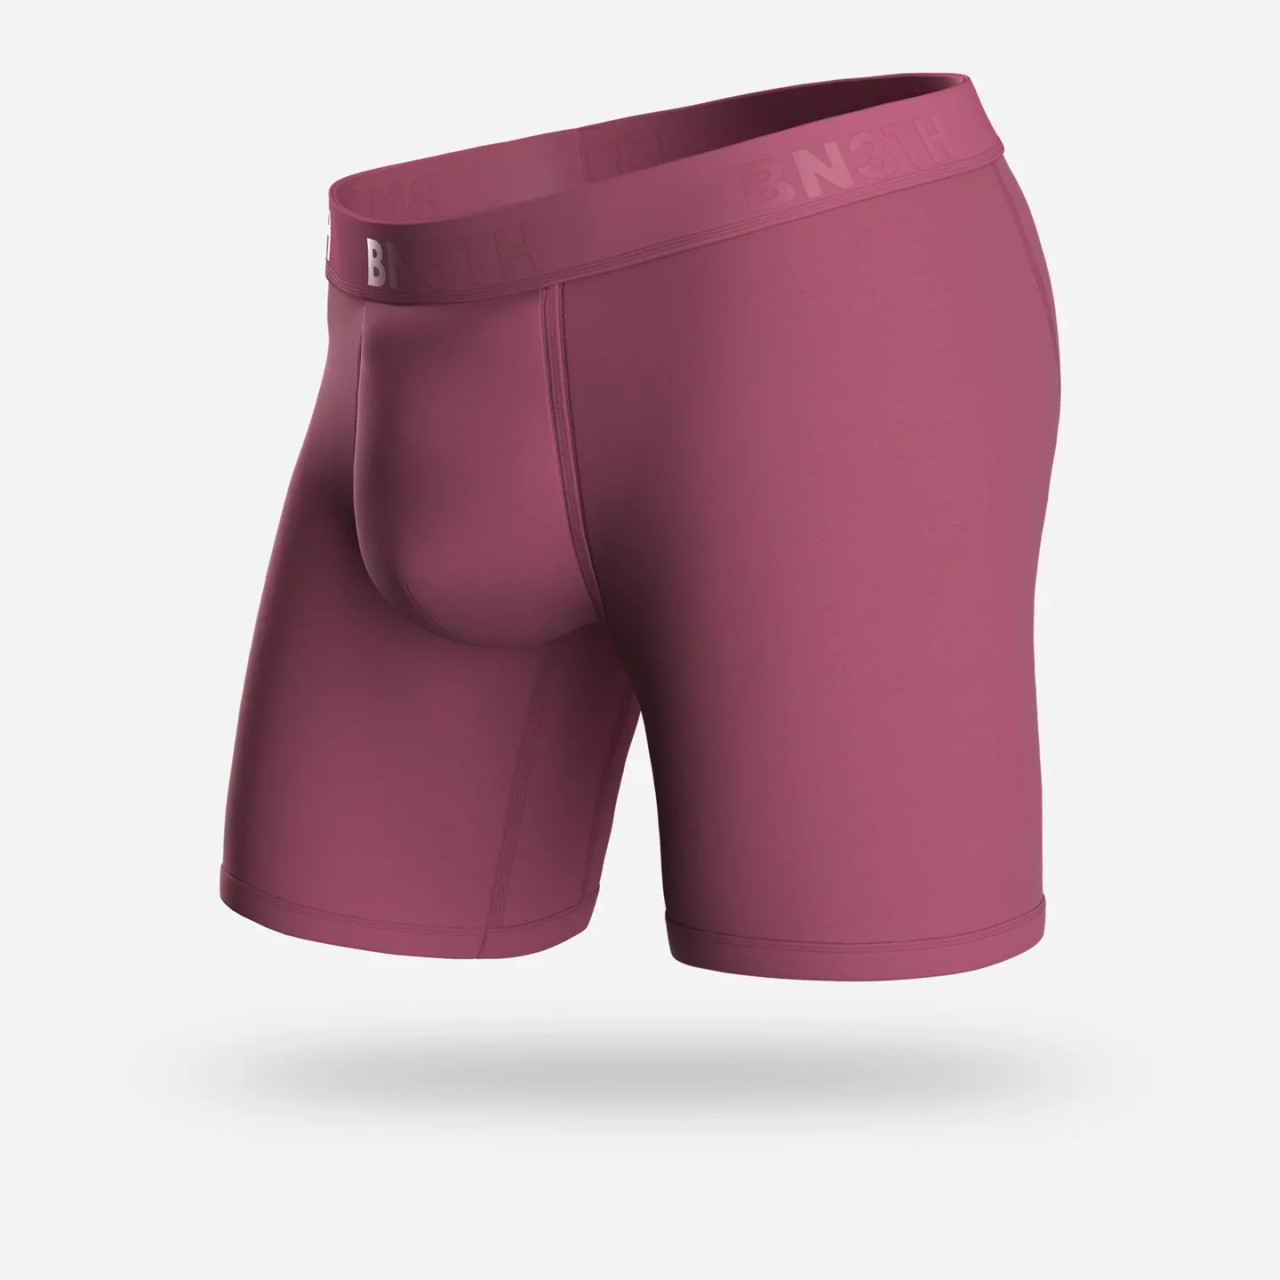 BN3TH Underwear Classic Boxer Brief Solid - Acai - BUNKER